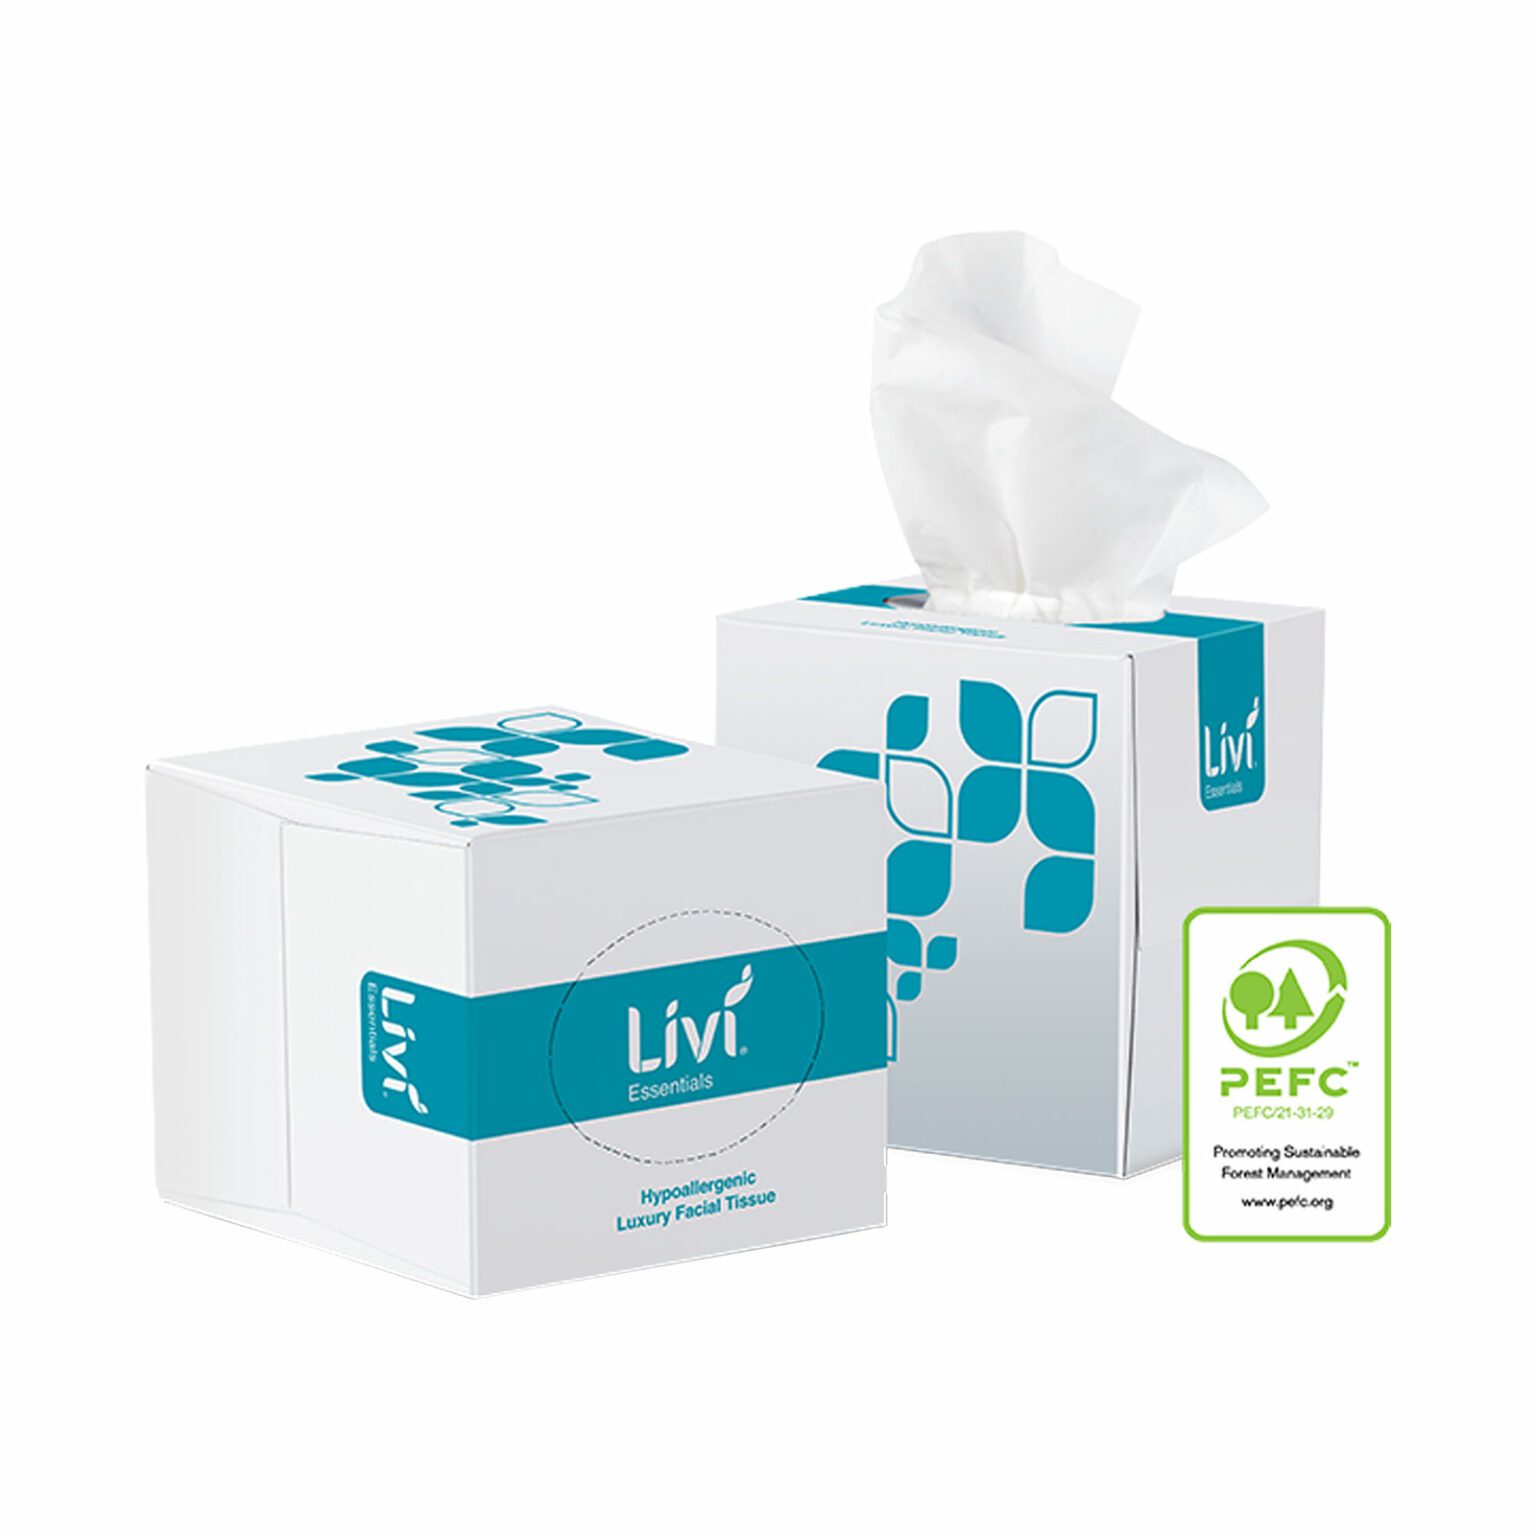 17777-Livi-Essentials-Facial-Tissue-Cube-90-Sheets-2-Ply-PEFC